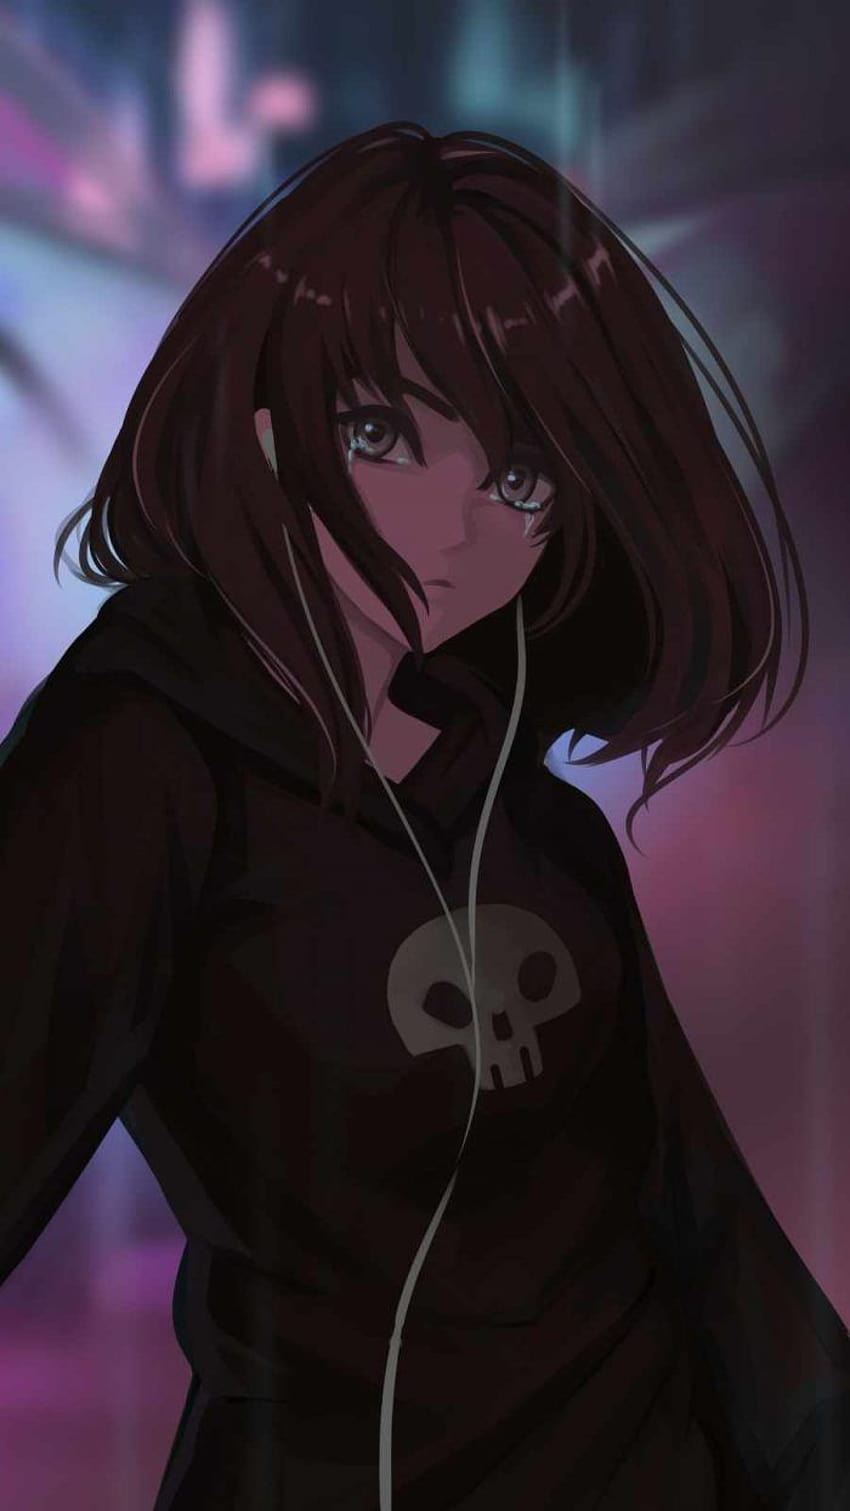 Pin by αуαтυѕ on avatars  Dark anime girl, Aesthetic anime, Mnemosyne anime